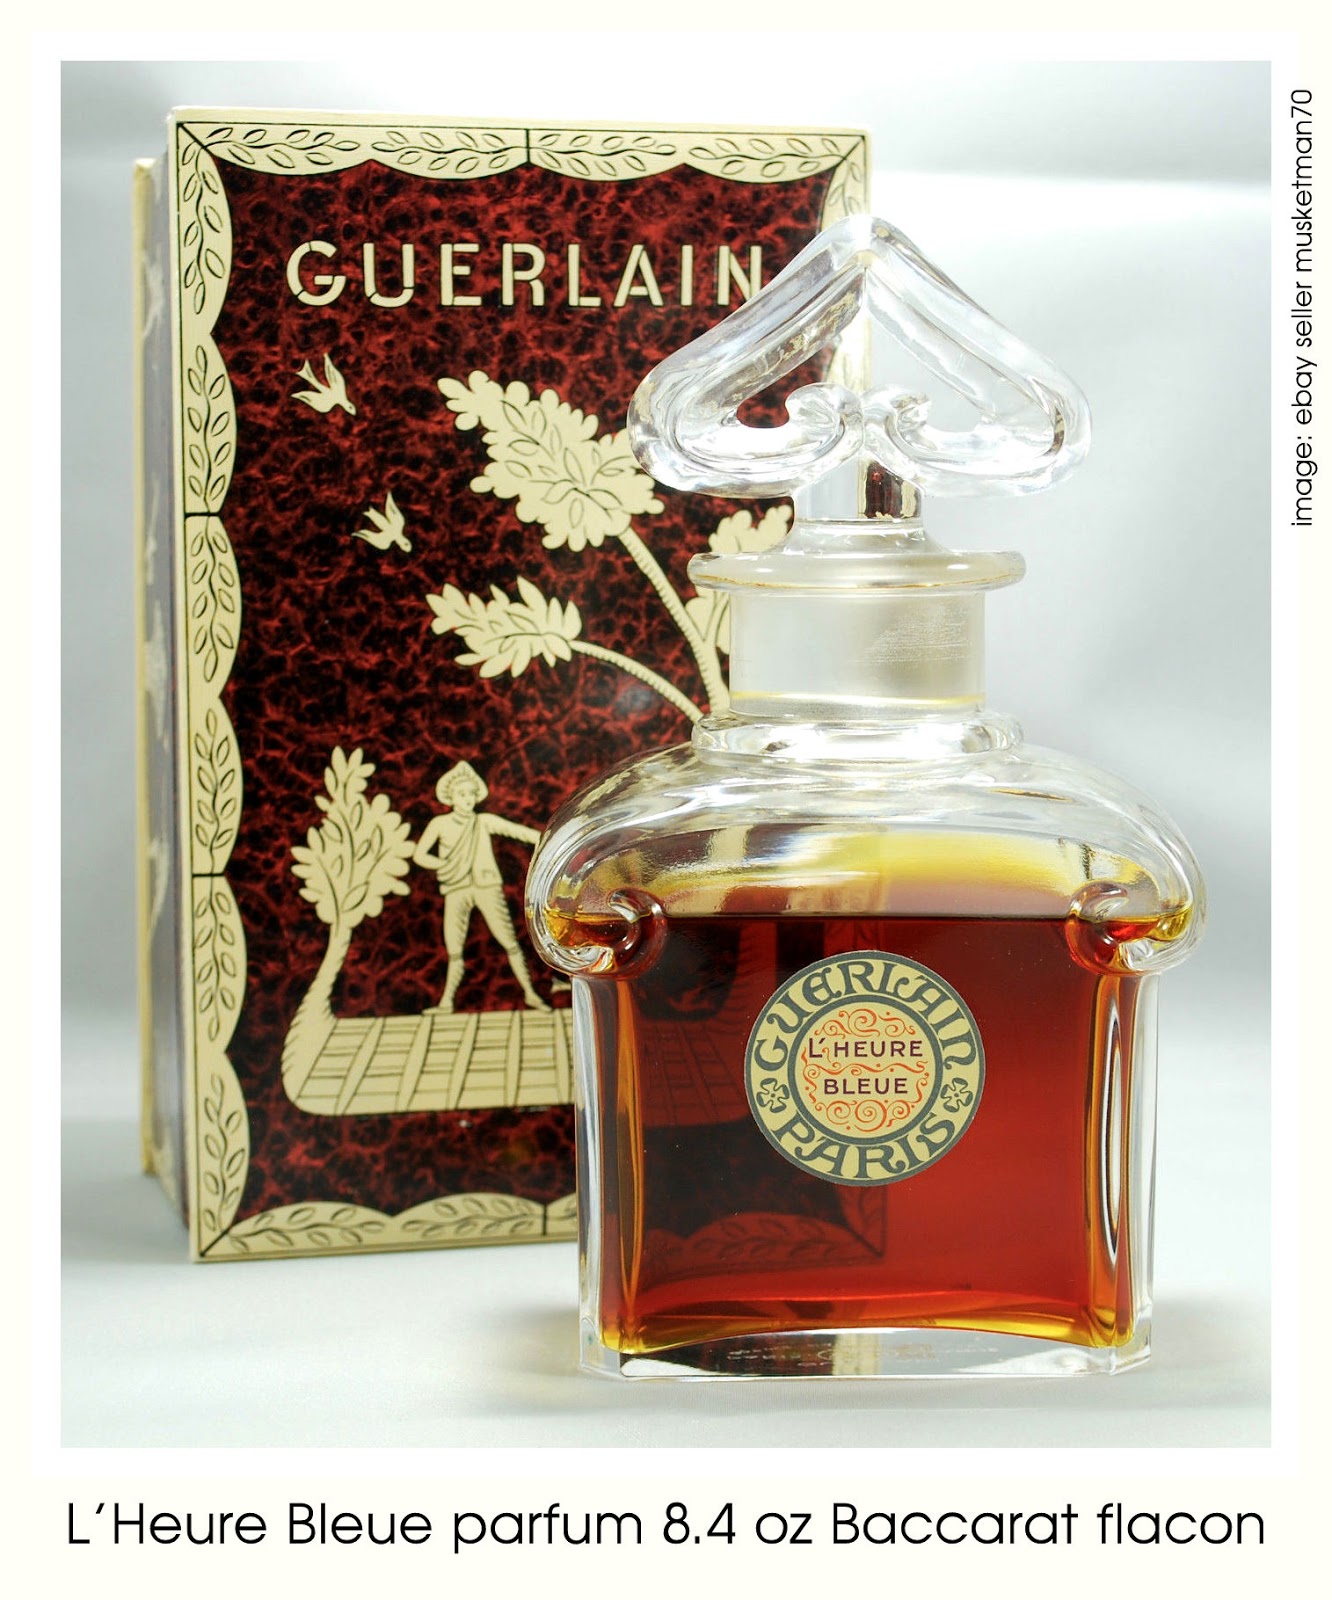 Guerlain Perfumes: Guerlain Rarities 10/18/15 - 10/24/15